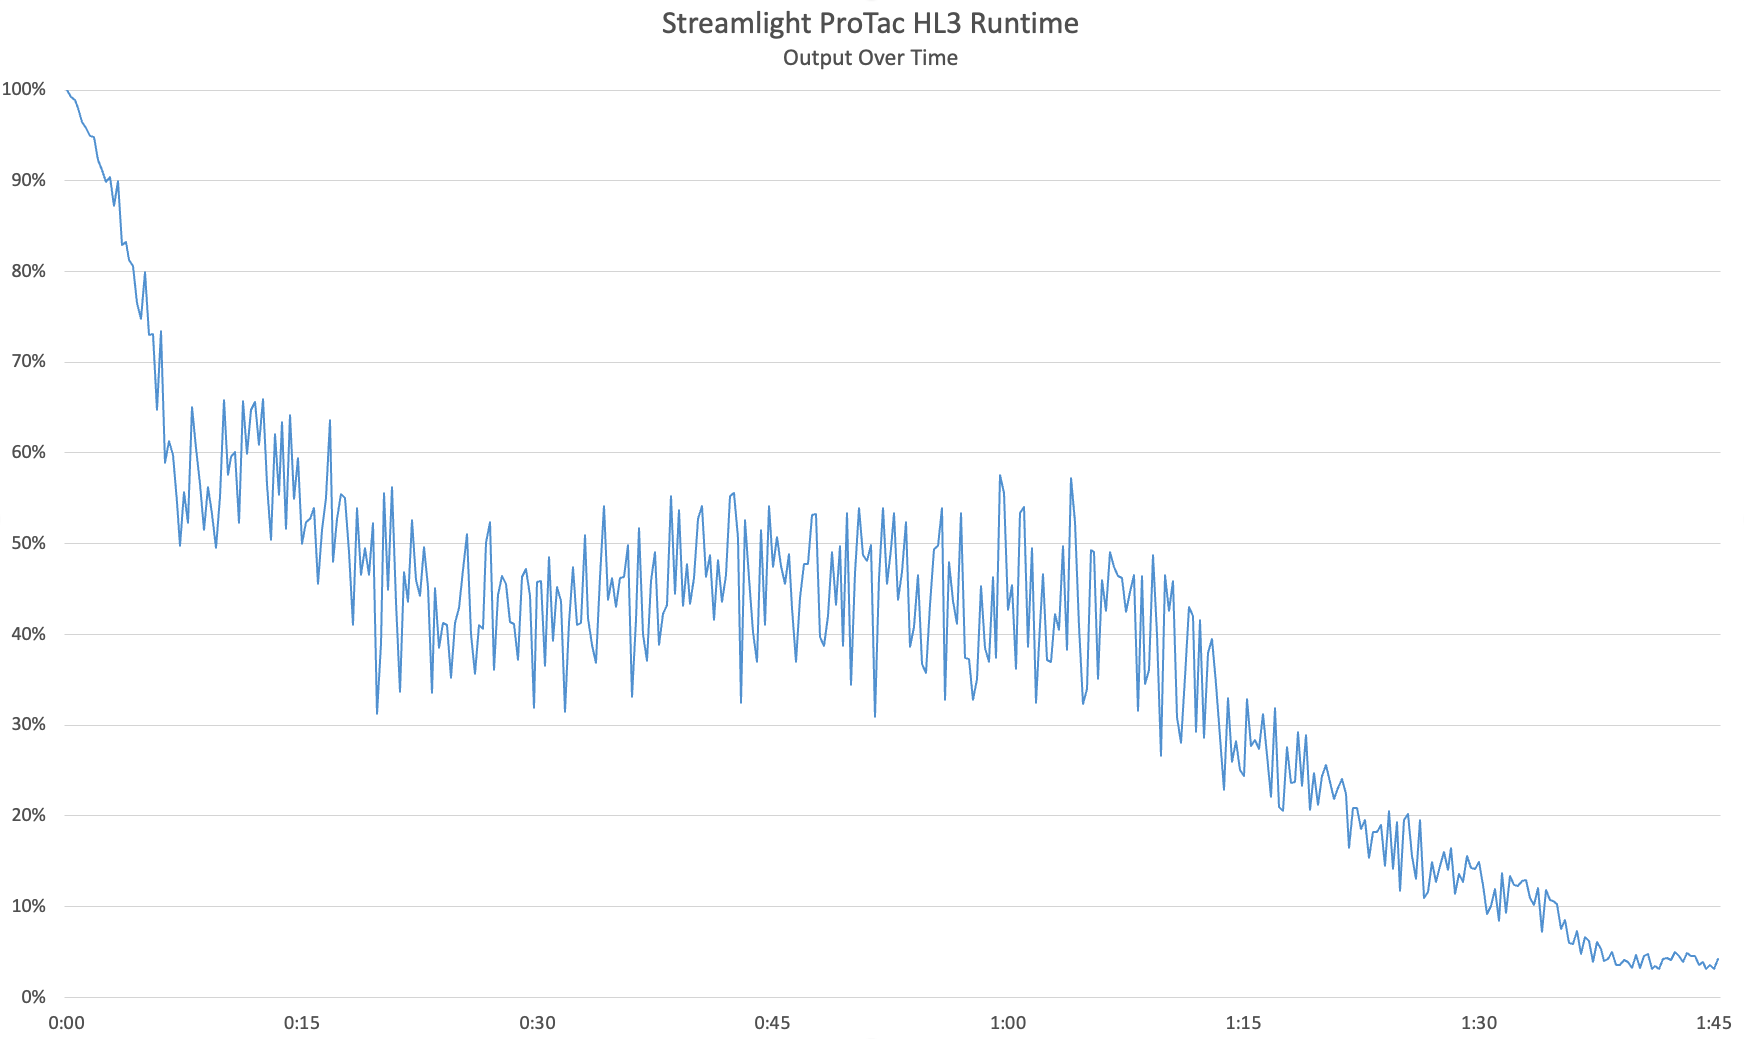 Output Over Time - Streamlight ProTac HL3 graph